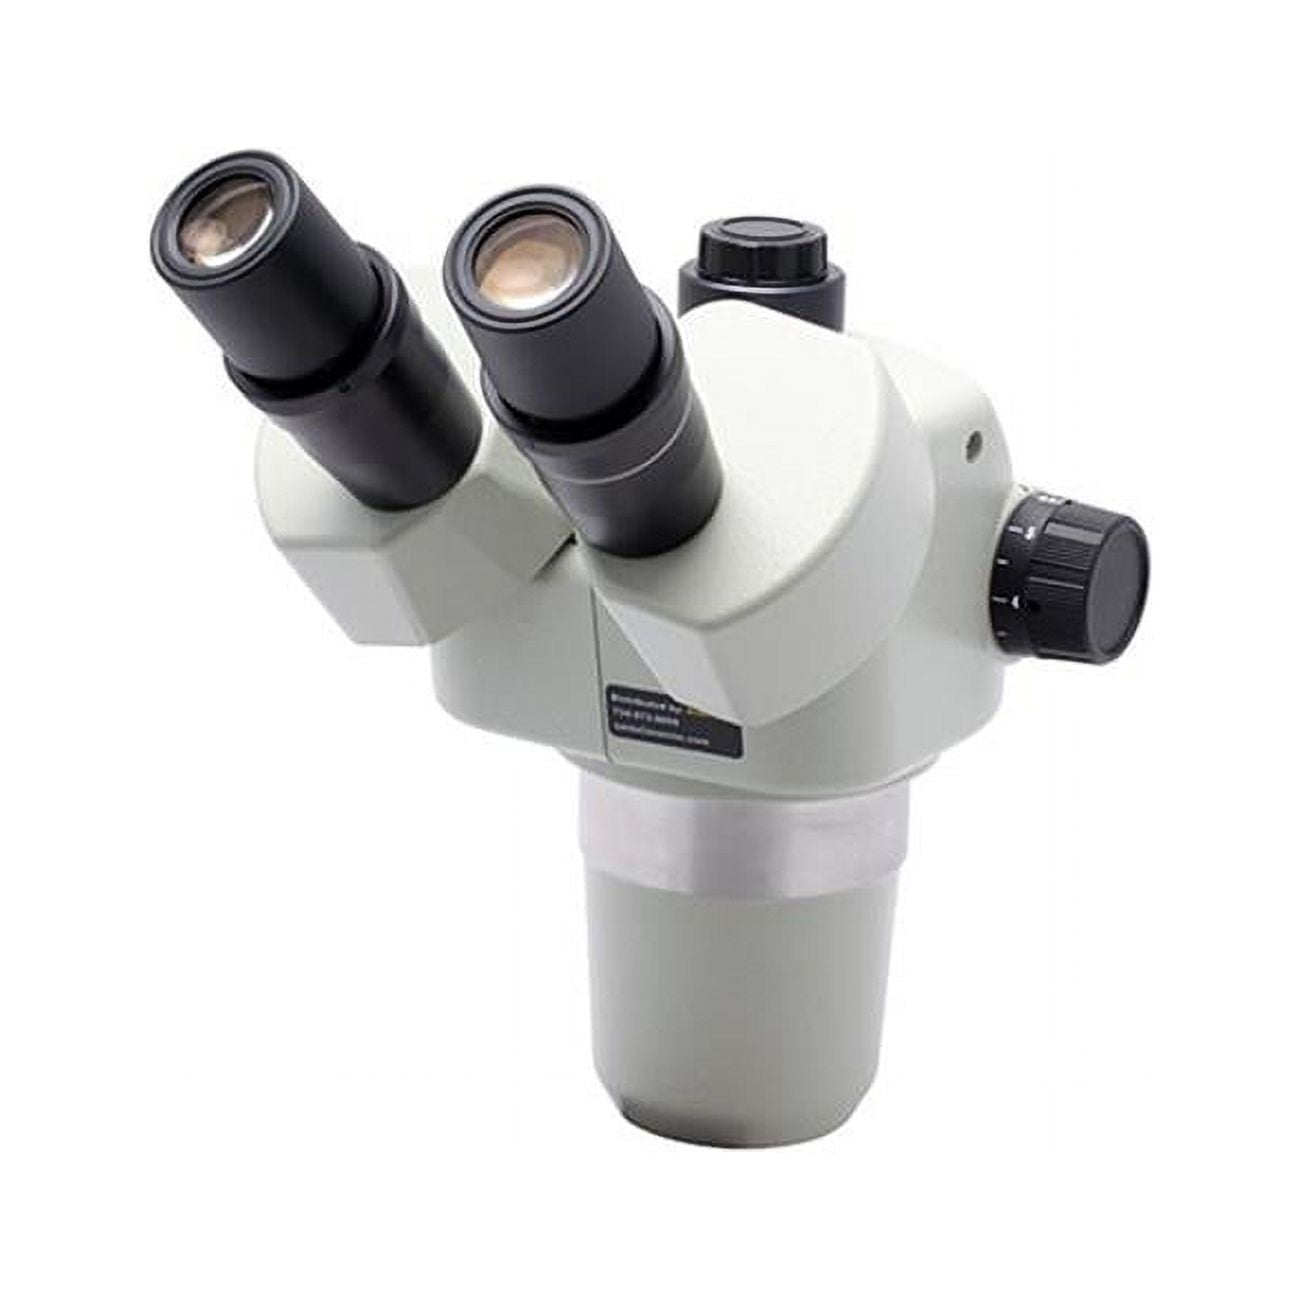 True Trinocular Stereo Zoom Microscope